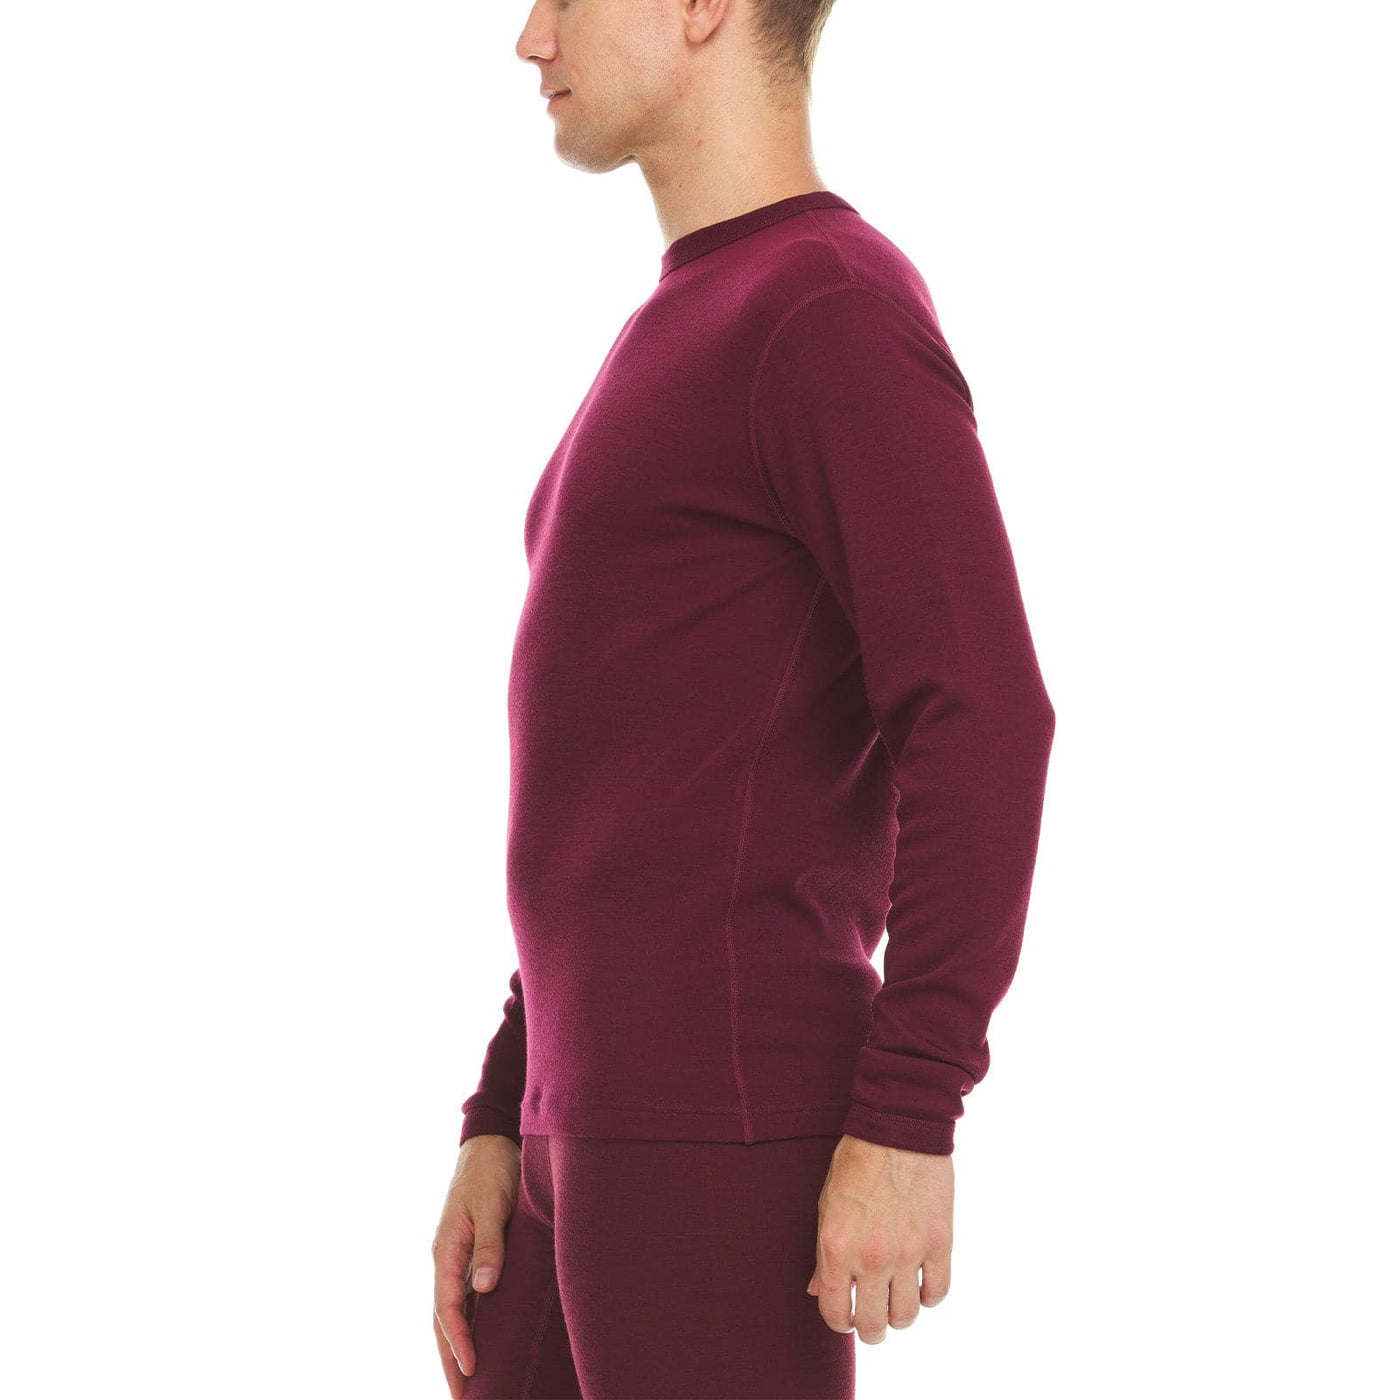 Peso medio: camiseta Chocorua para hombre, 100% lana merina